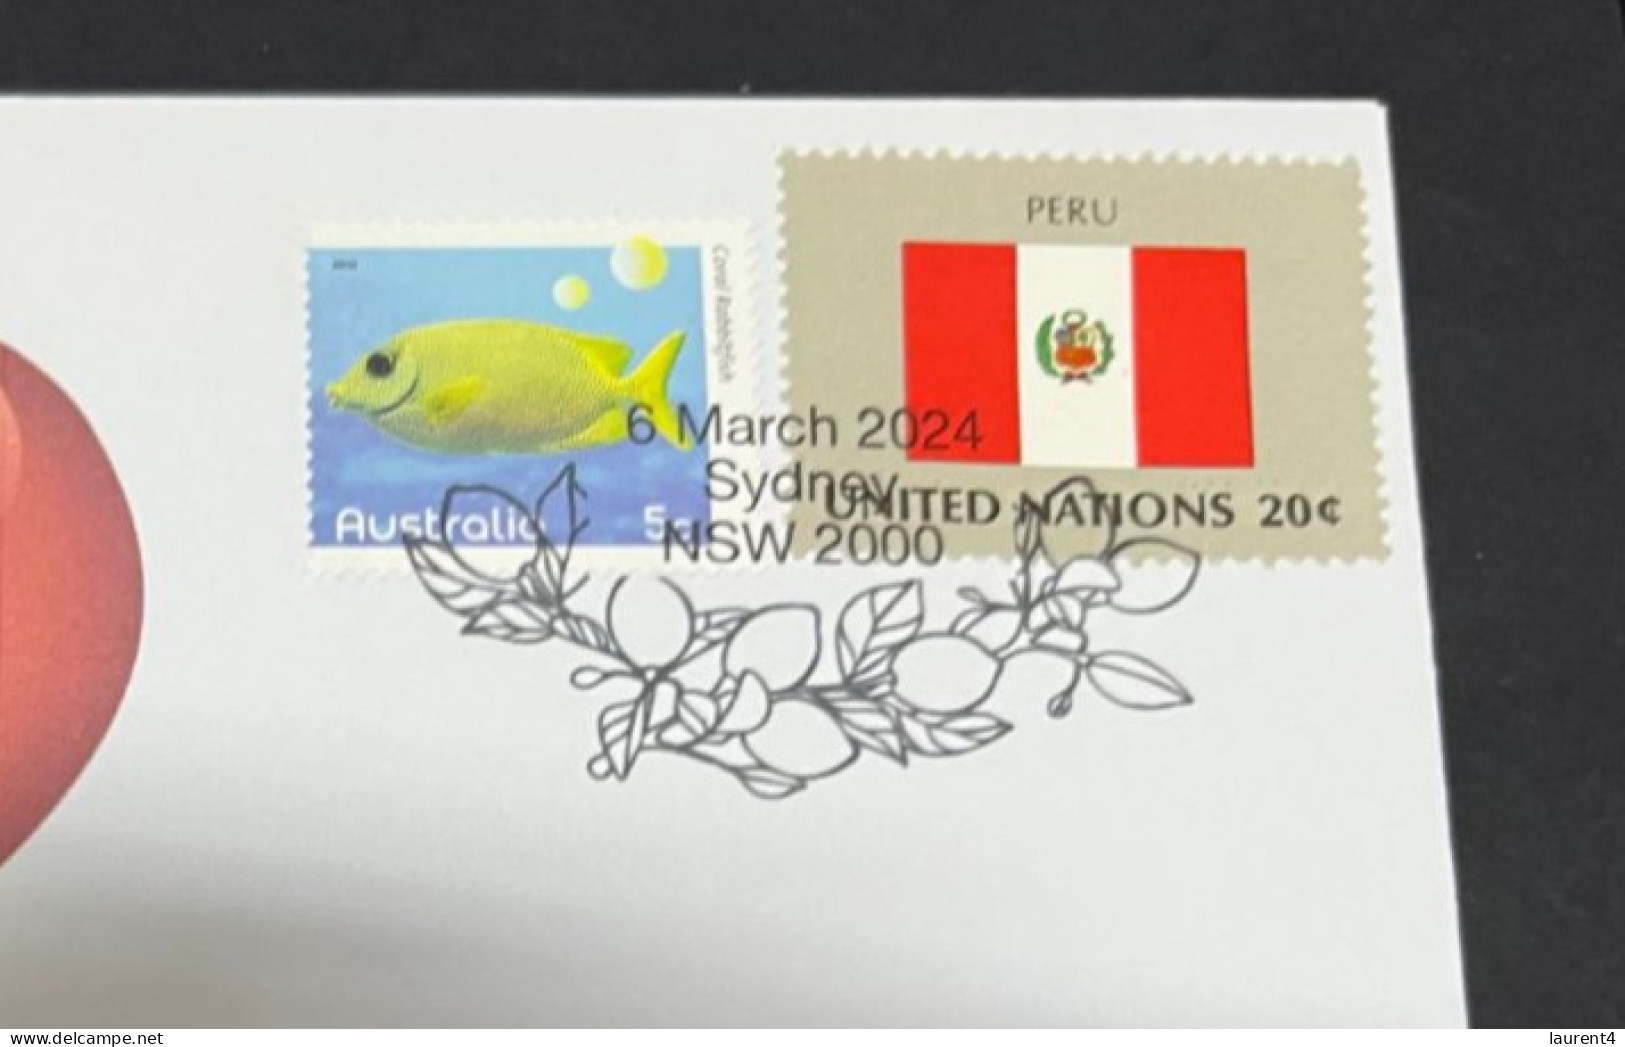 6-3-2024 (2 Y 12) COVID-19 4th Anniversary - Peru - 6 March 2024 (with Peru UN Flag Stamp) - Malattie